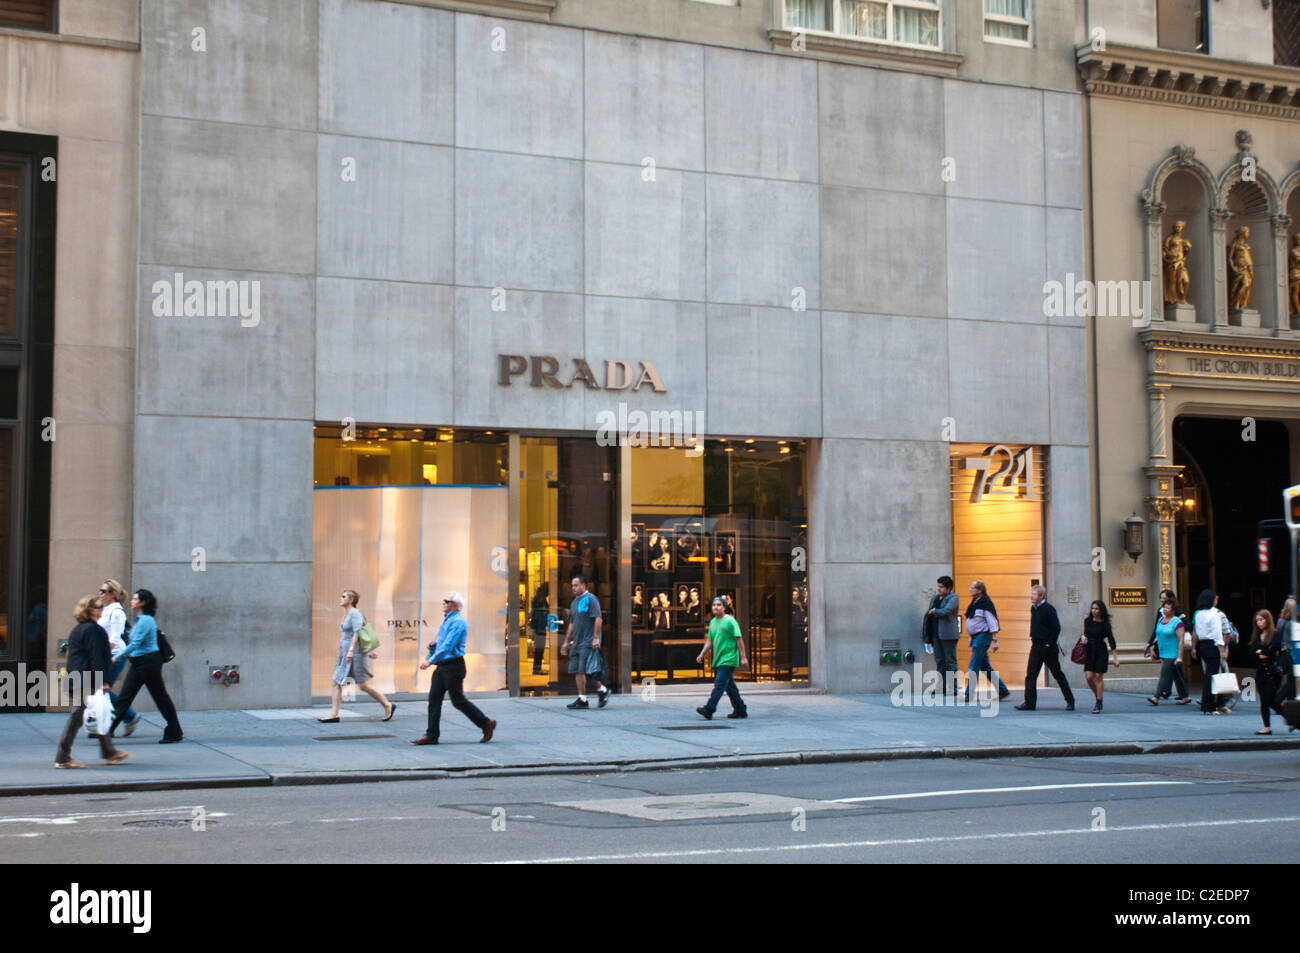 Prada shop new york High Resolution Stock Photography and Images - Alamy